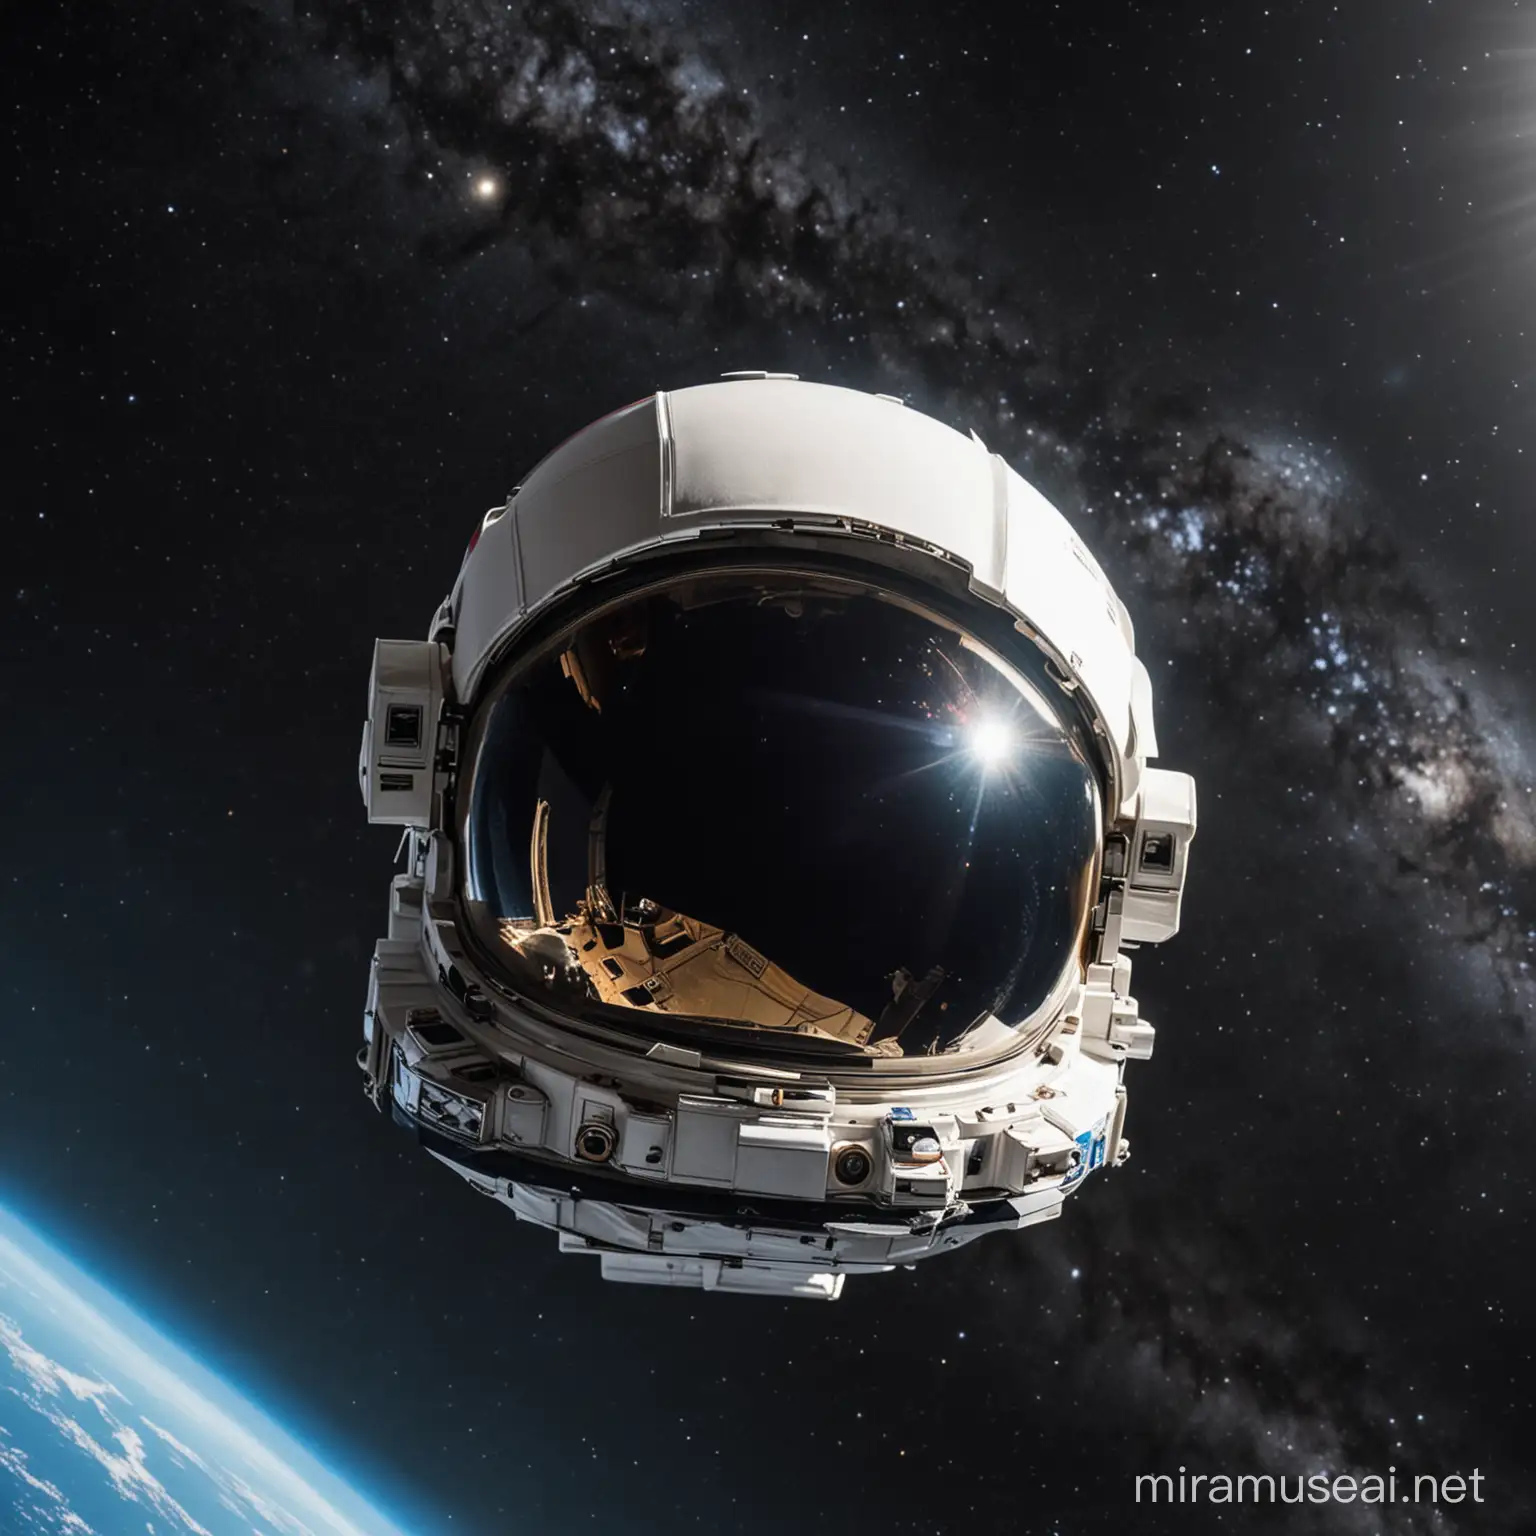 Lonely Astronaut Helmet Adrift in the Vastness of Space